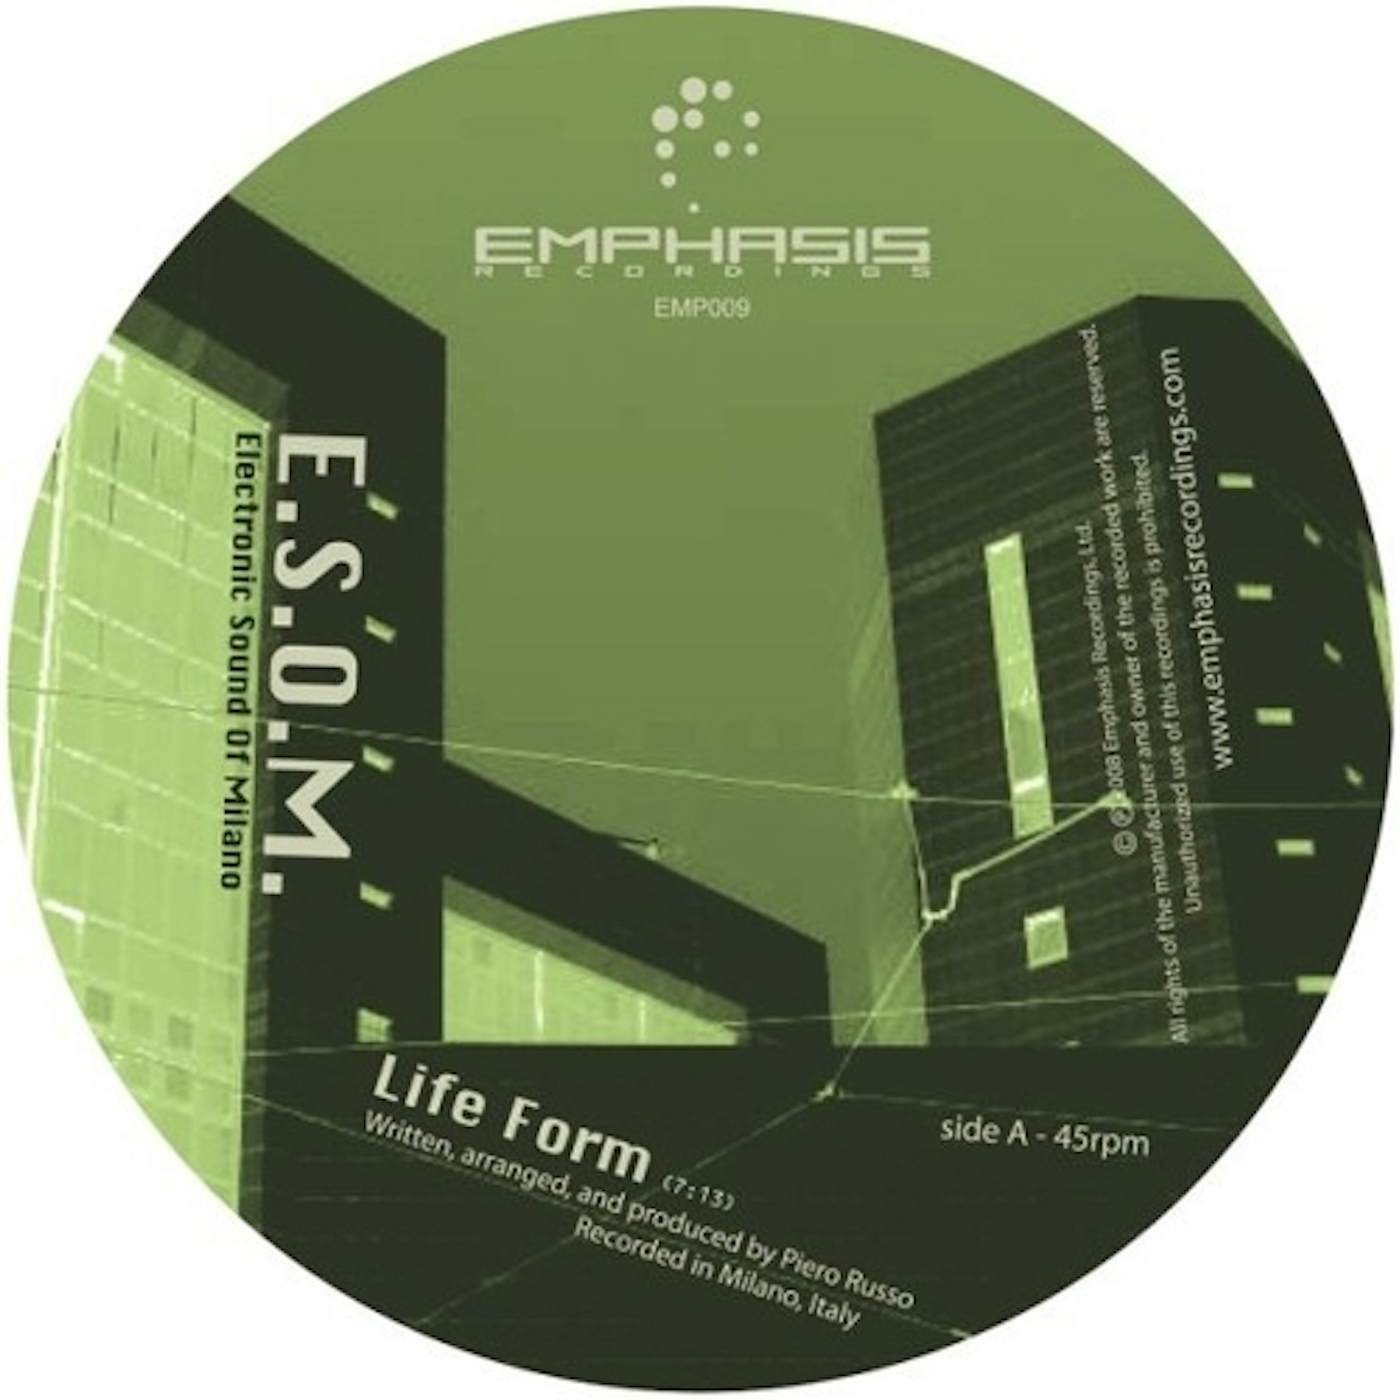 E.S.O.M. LIFE FORM Vinyl Record